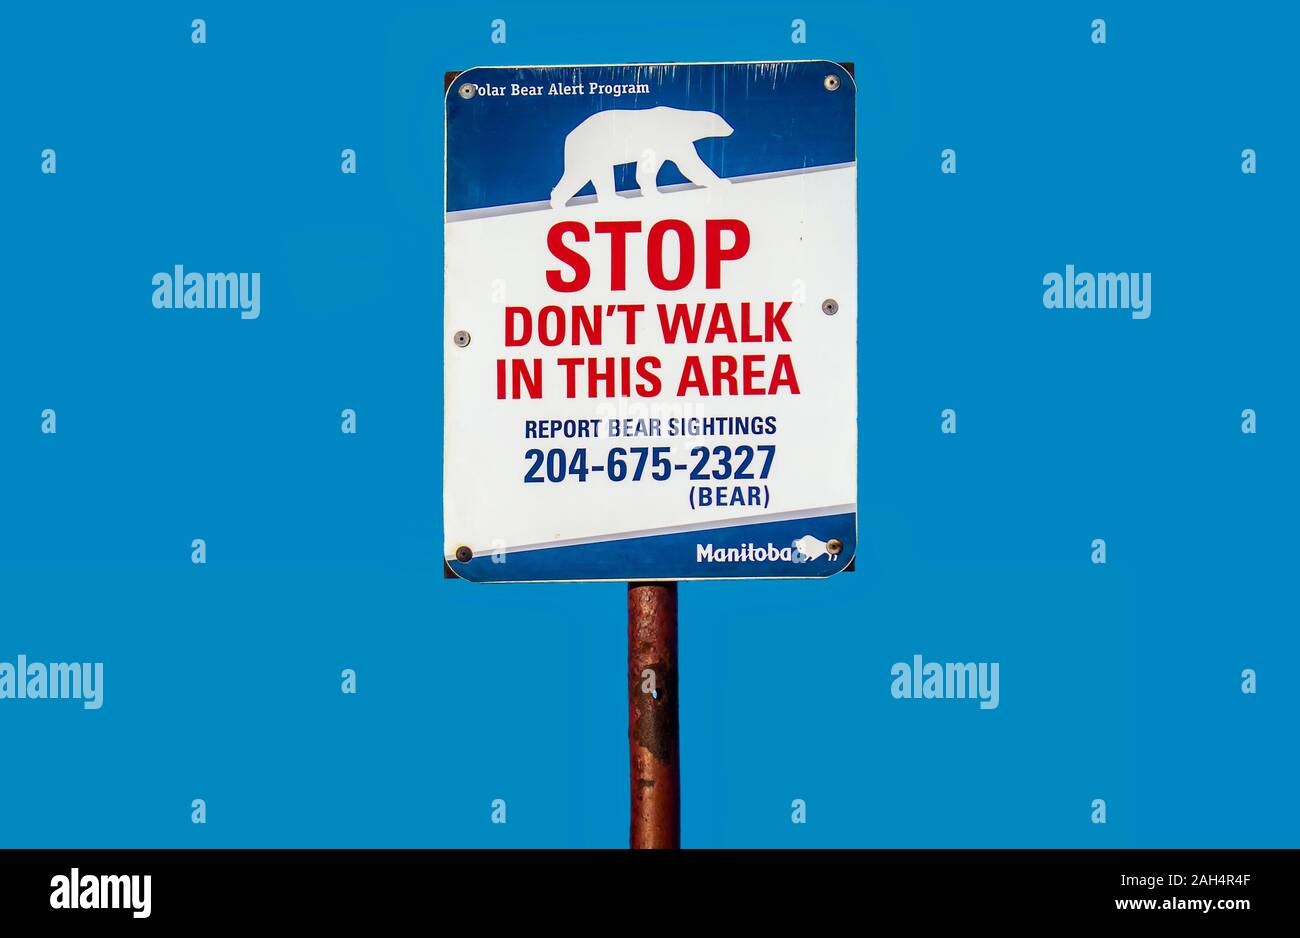 Churchill, Canada - November 13, 2014. A public safety street sign, warning pedestrians not to walk in an area where polar bears roam. Stock Photo